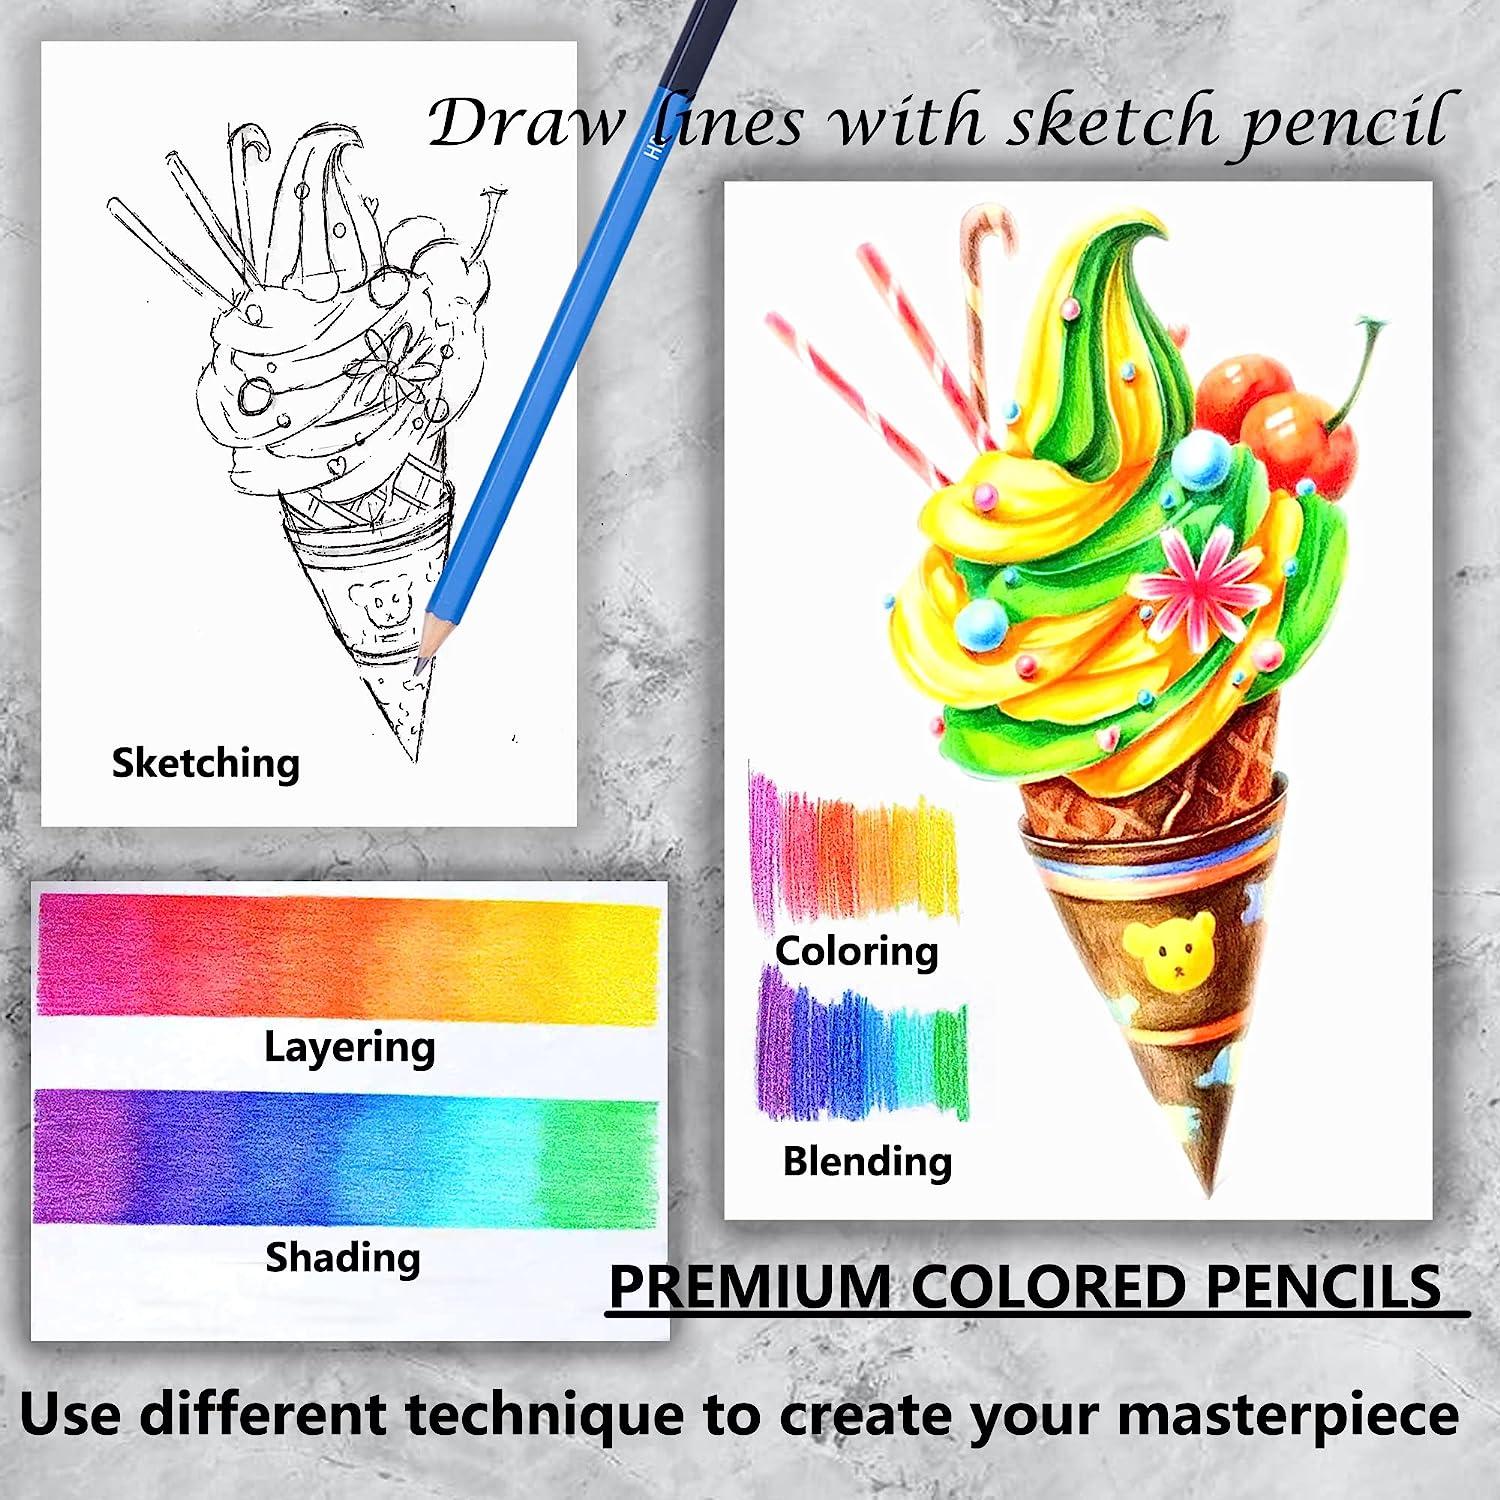 KALOUR 72 Count Colored Pencils for Adult Coloring Books, Soft Core